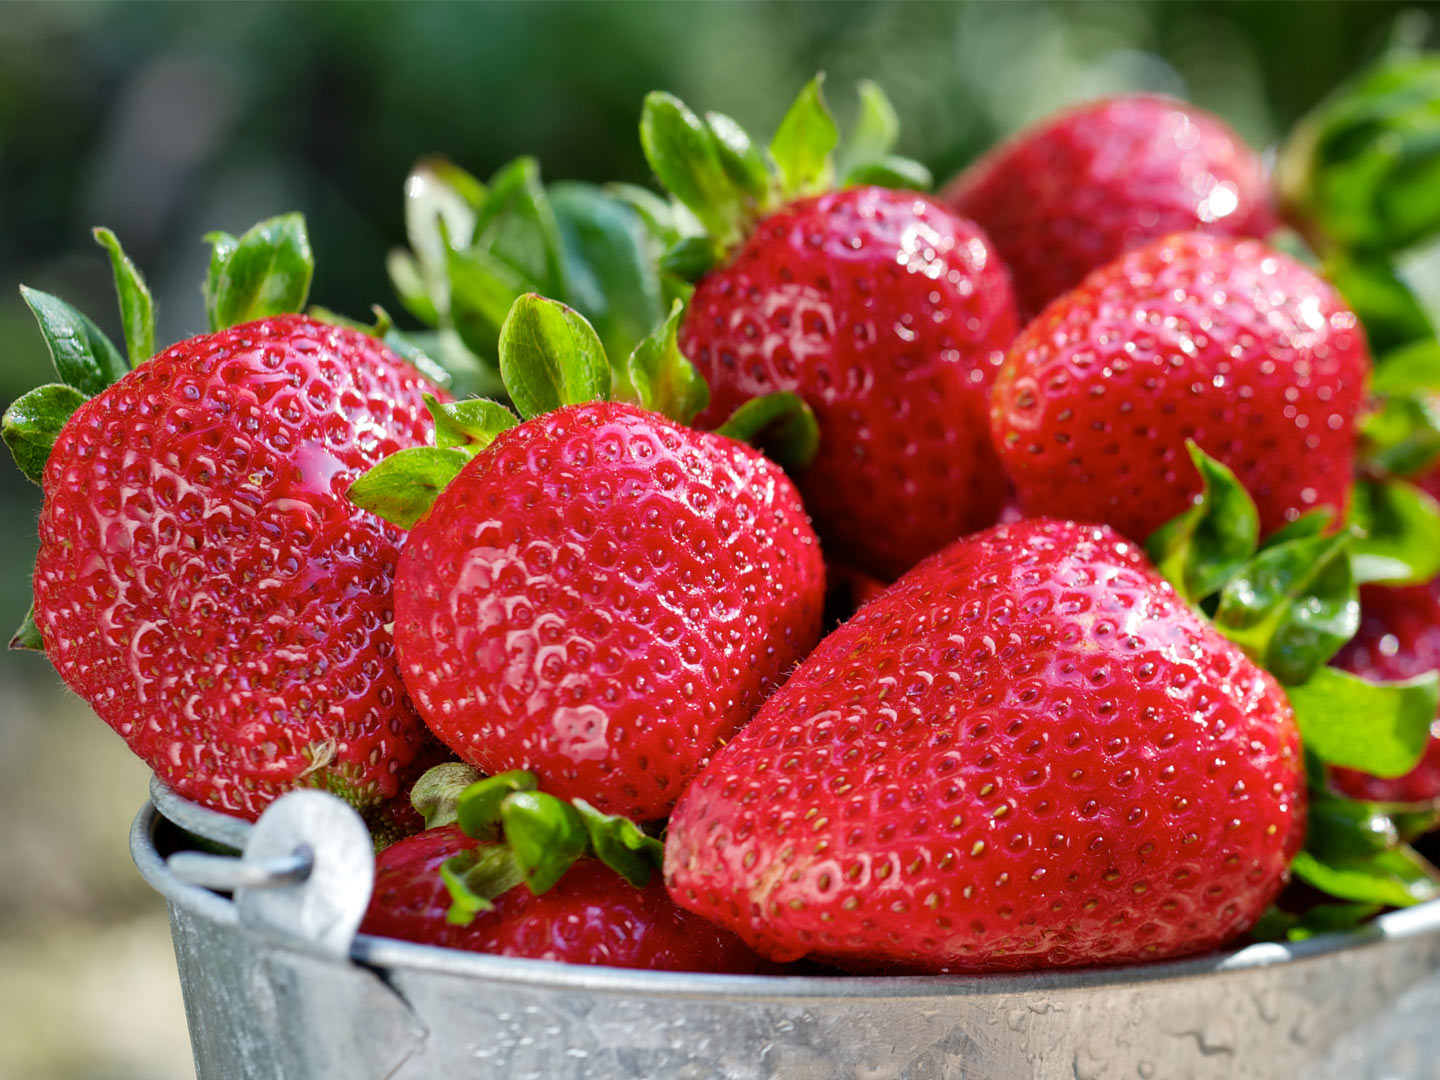 Strawberries again top 2018's 'Dirty Dozen' fruits and veggies